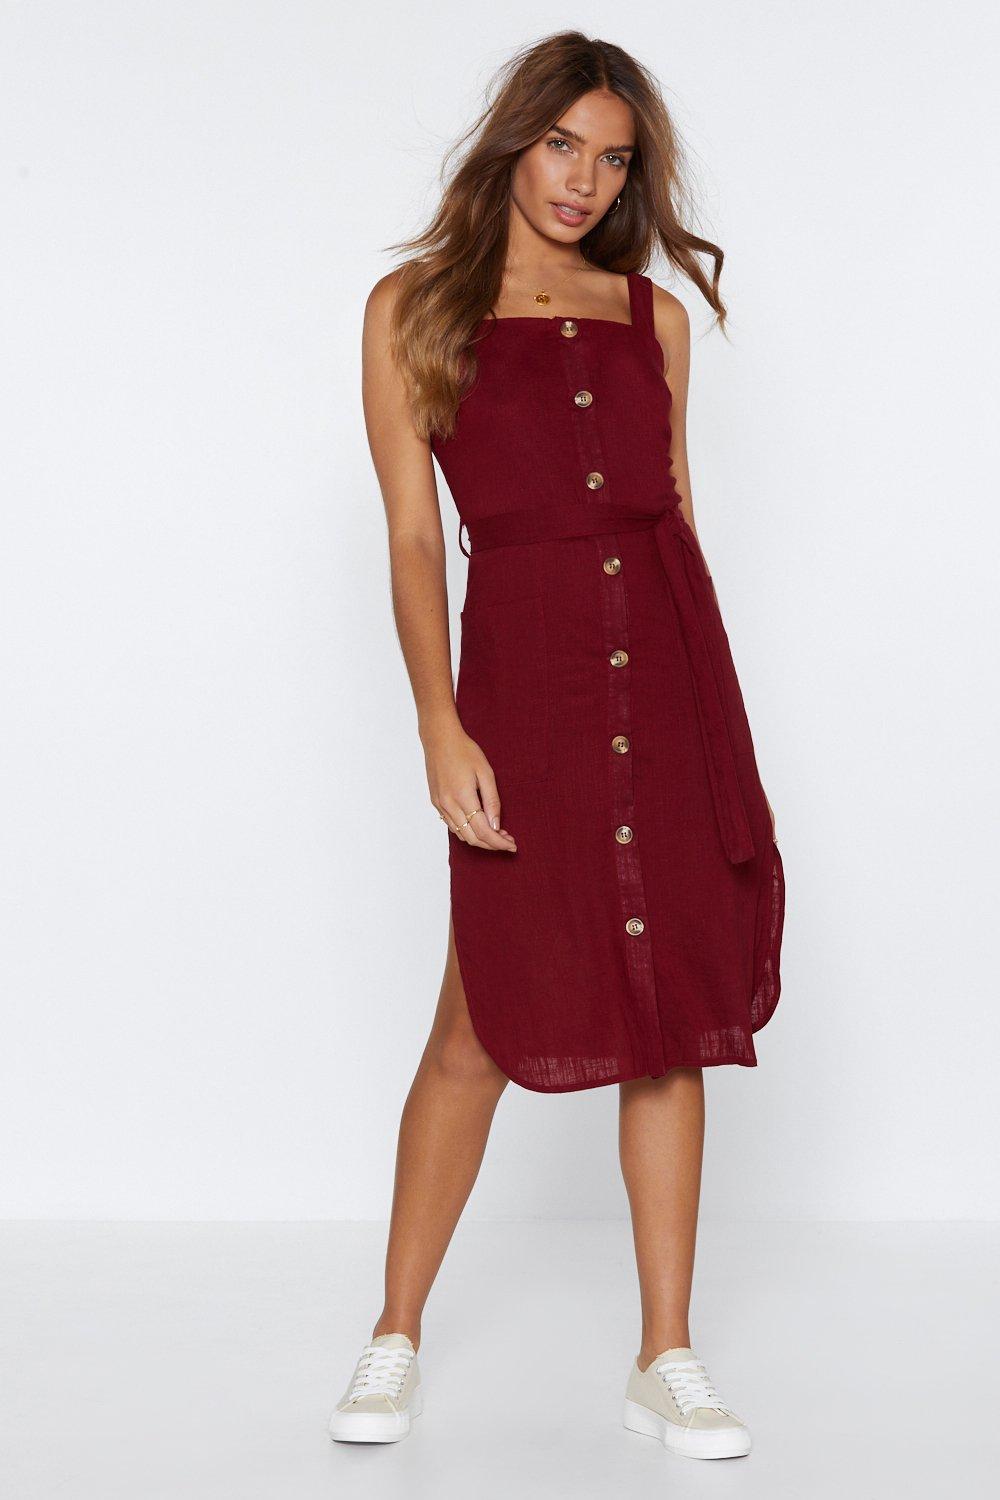 burgundy button down dress